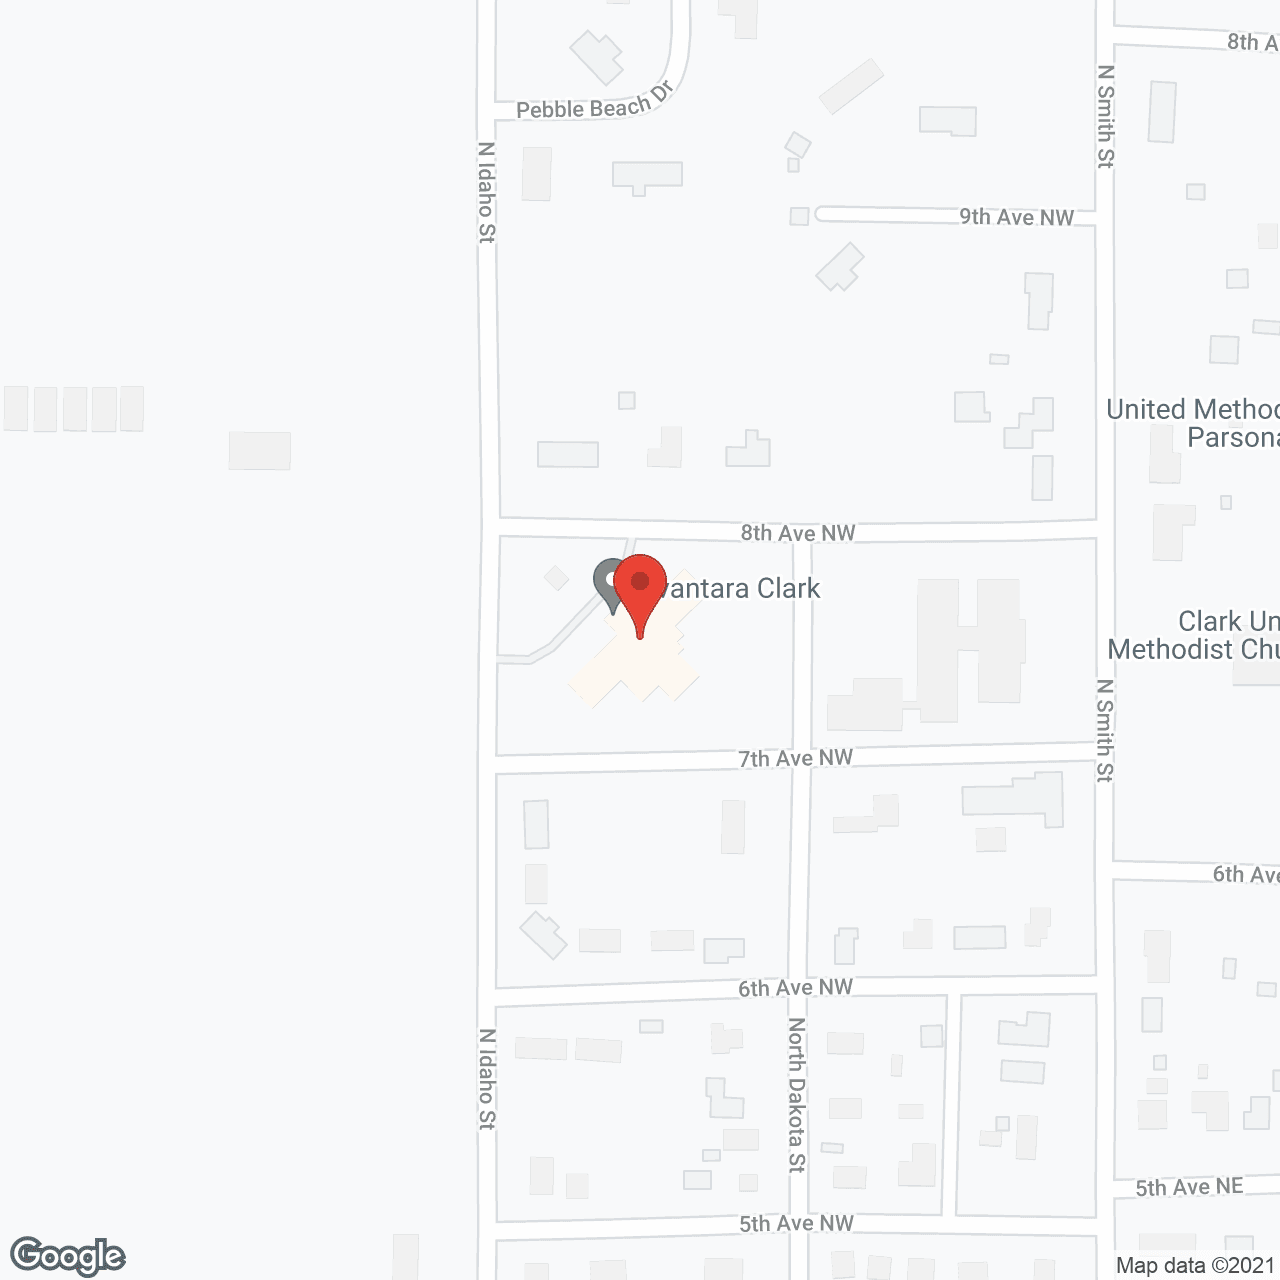 Golden LivingCenter - Clark in google map